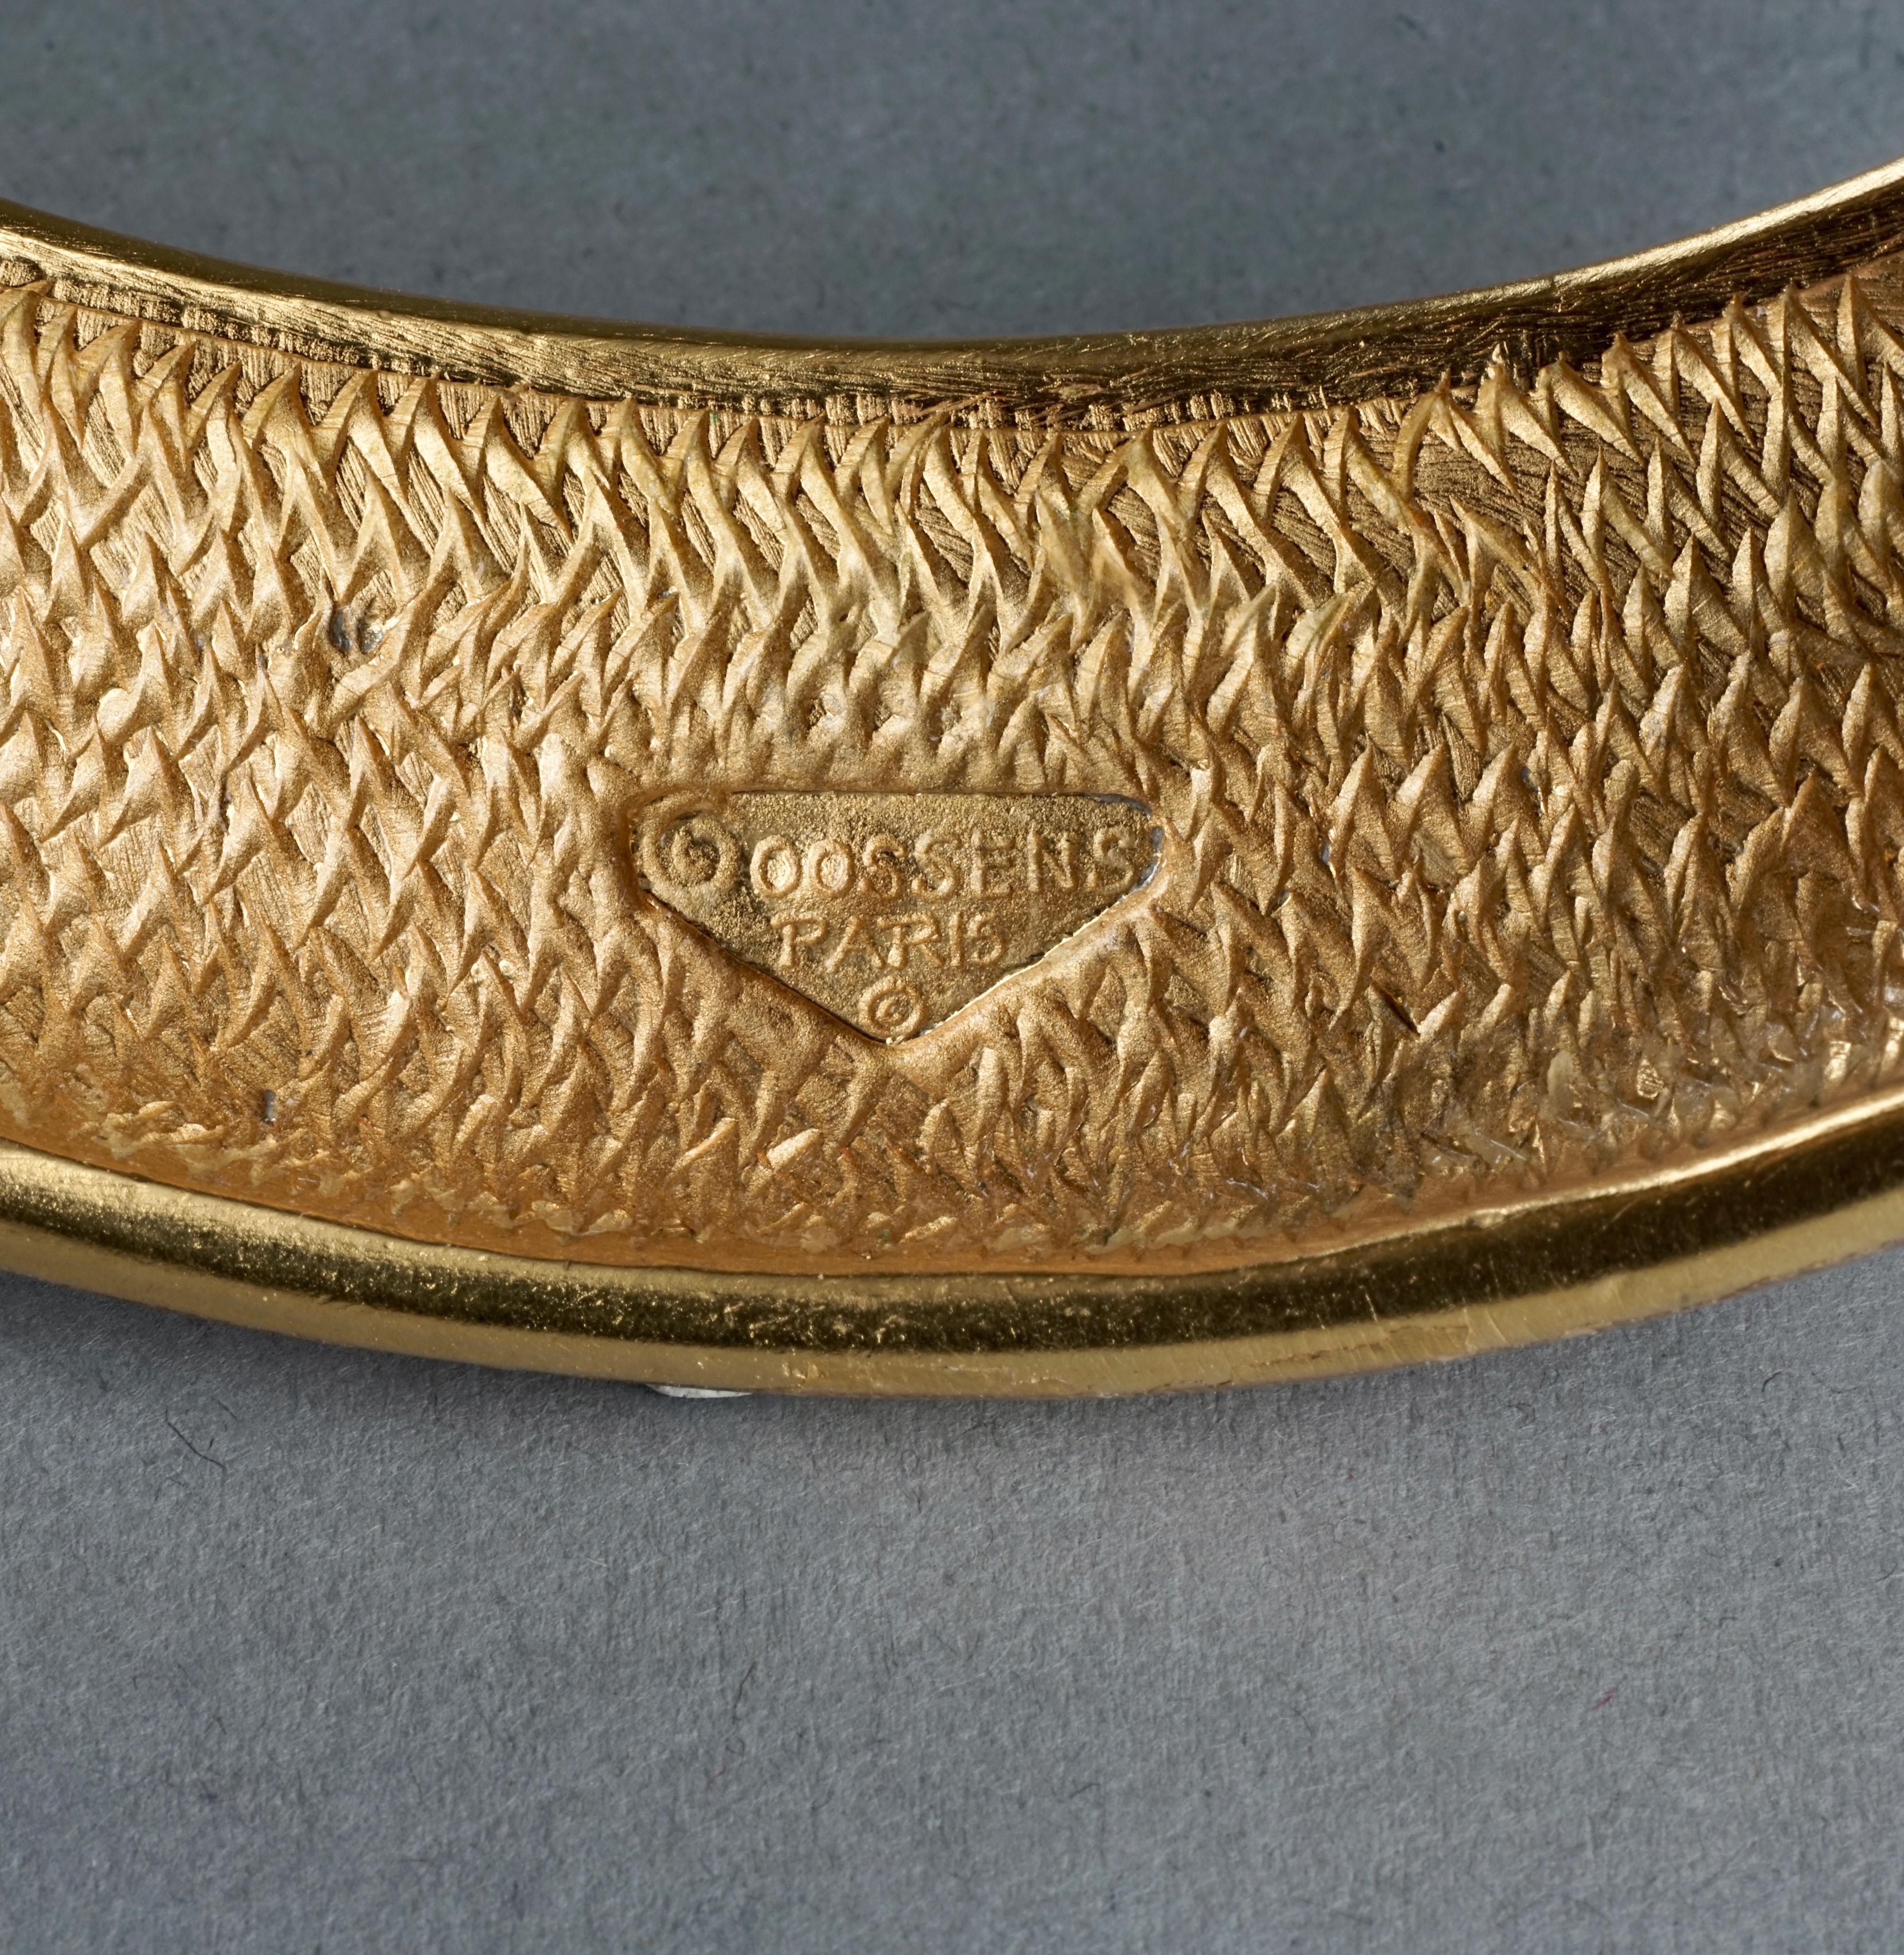 Vintage ROBERT GOOSSENS Textured Brushed Gold Rigid Choker Necklace For Sale 1